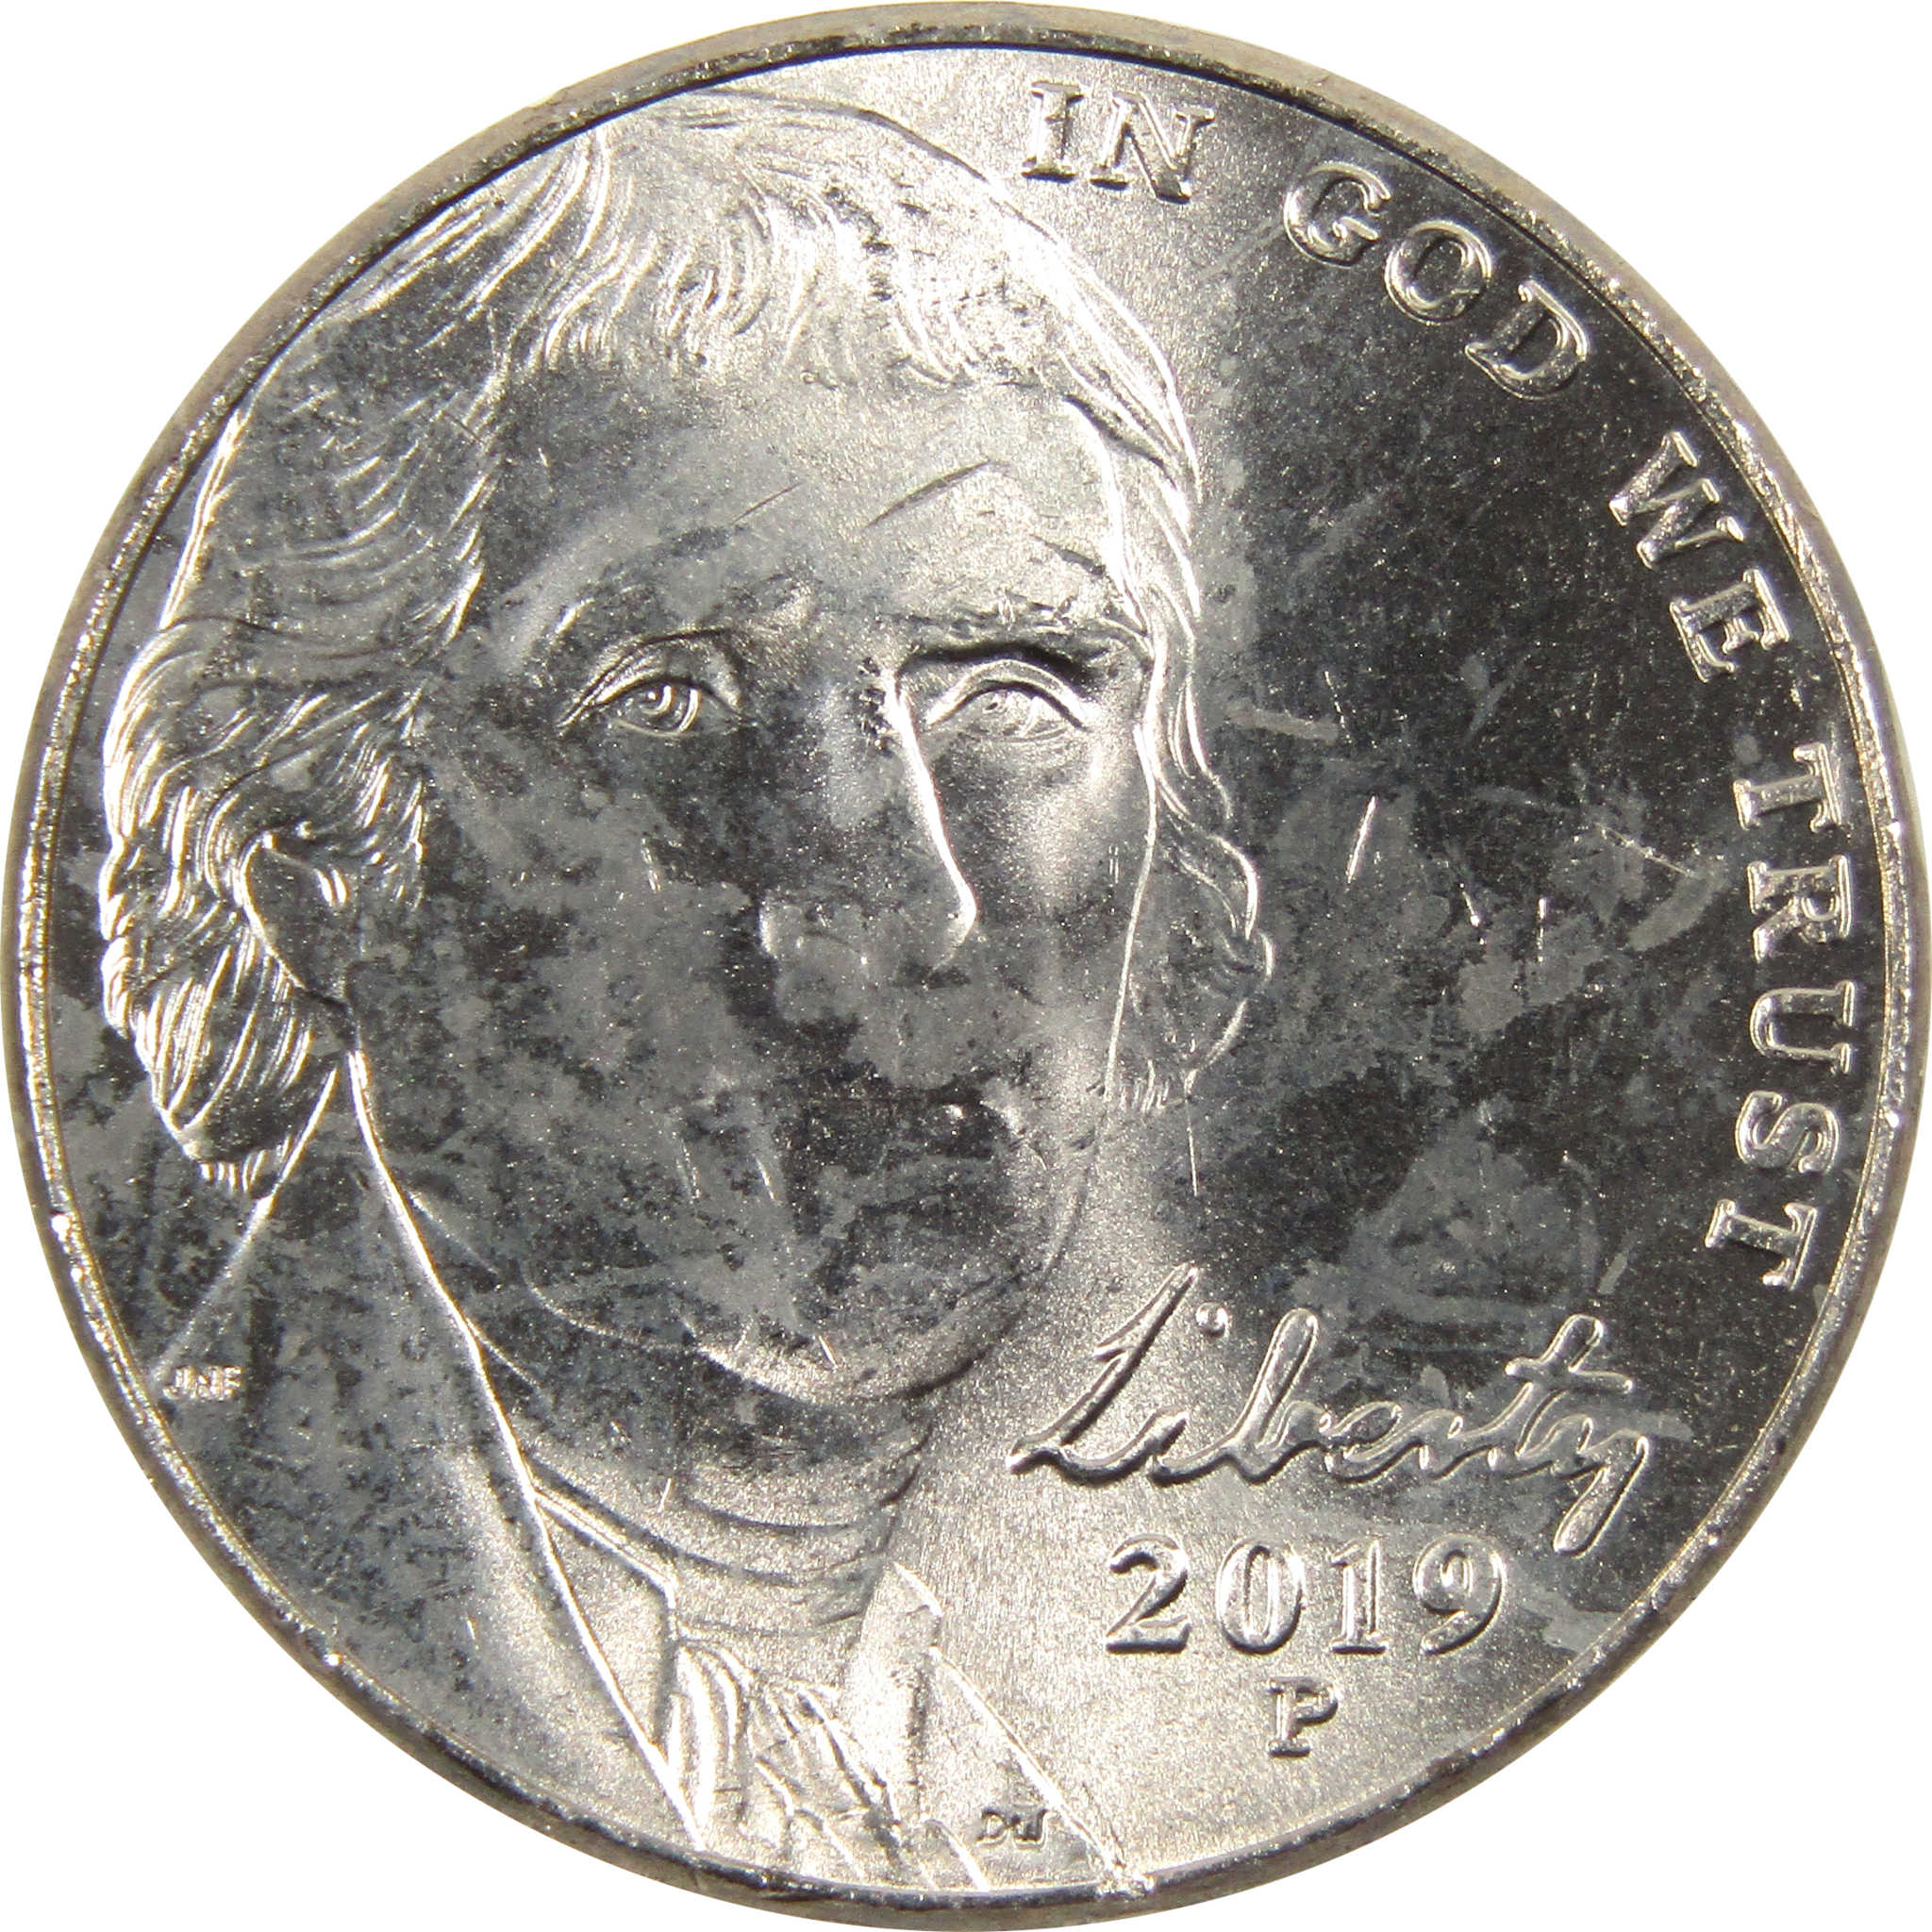 2019 P Jefferson Nickel BU Uncirculated 5c Coin